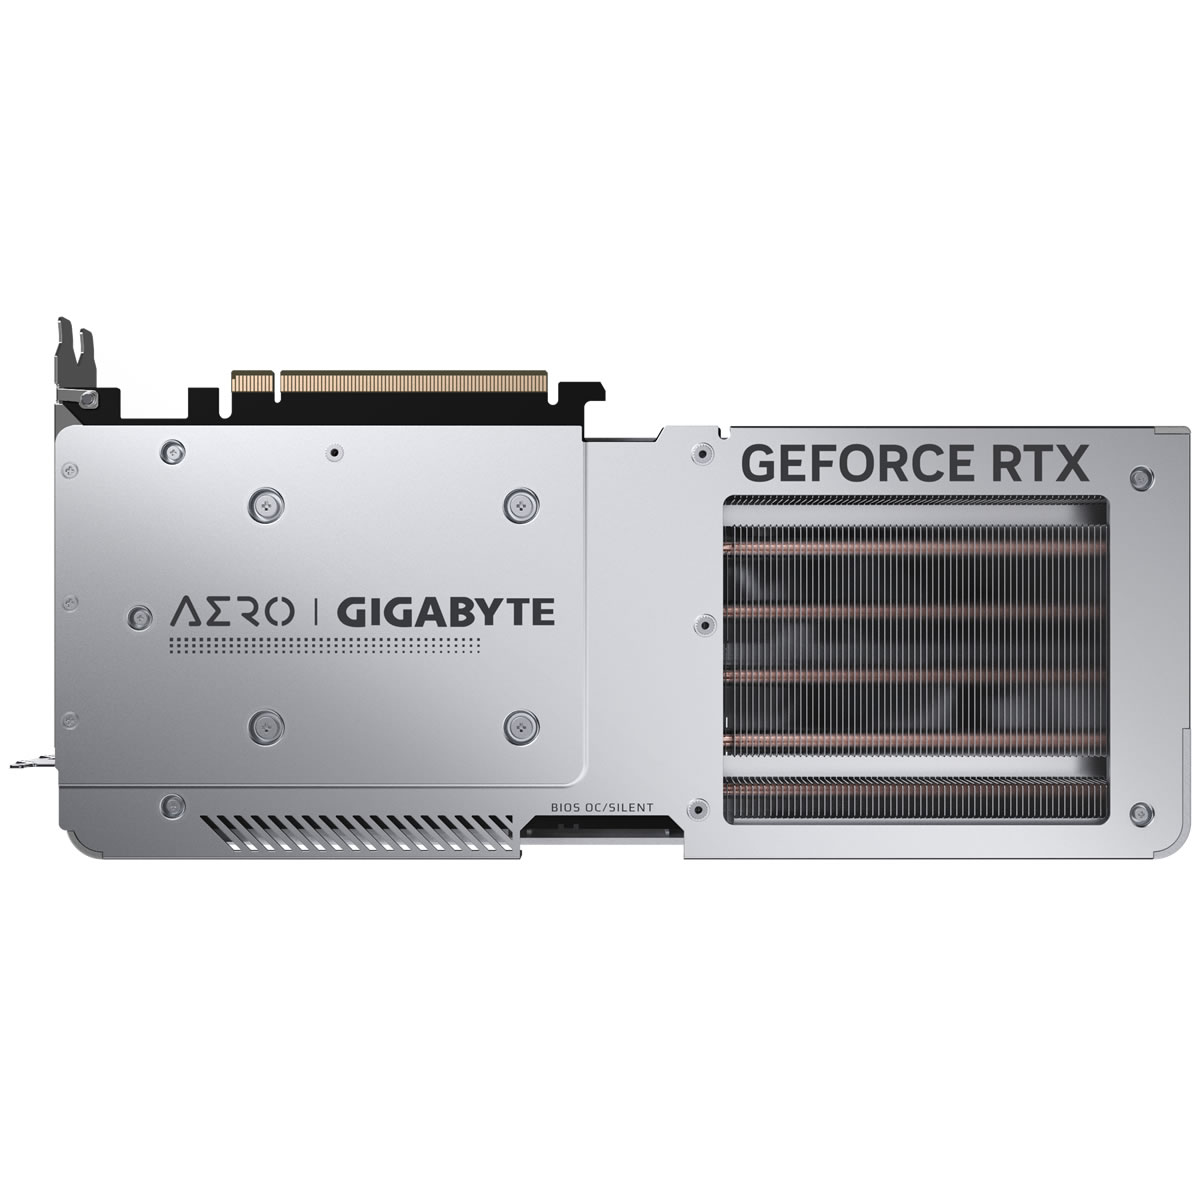 Gigabyte - Gigabyte GeForce RTX 4070 Aero OC 12GB GDDR6X PCI-Express Graphics Card